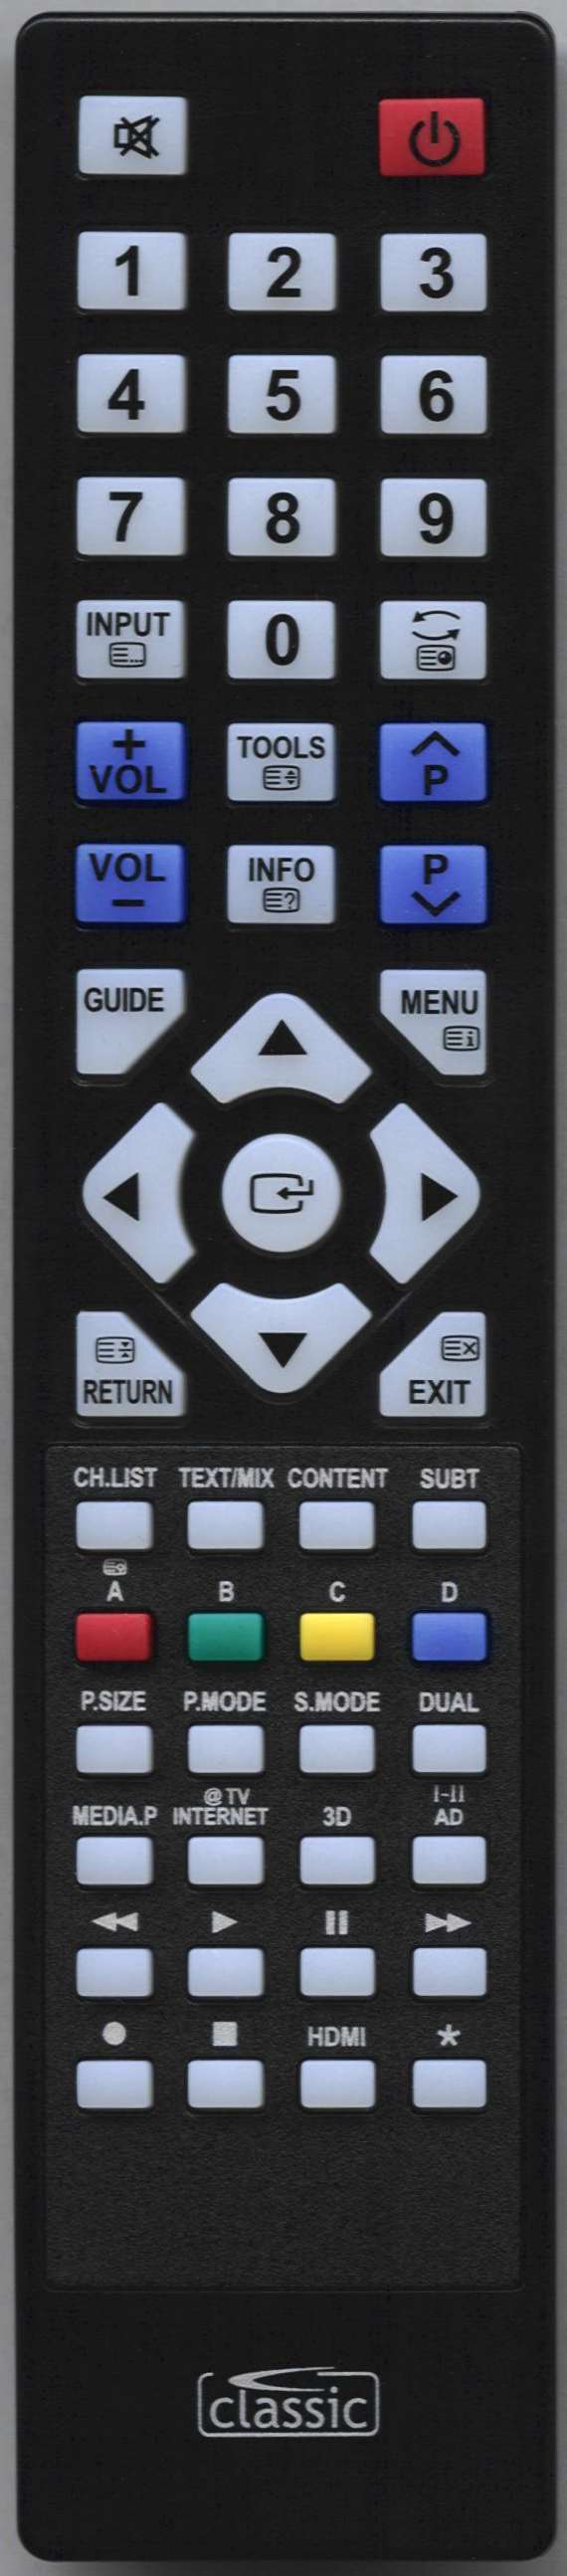 SAMSUNG PS63C7000YWXXC Remote Control